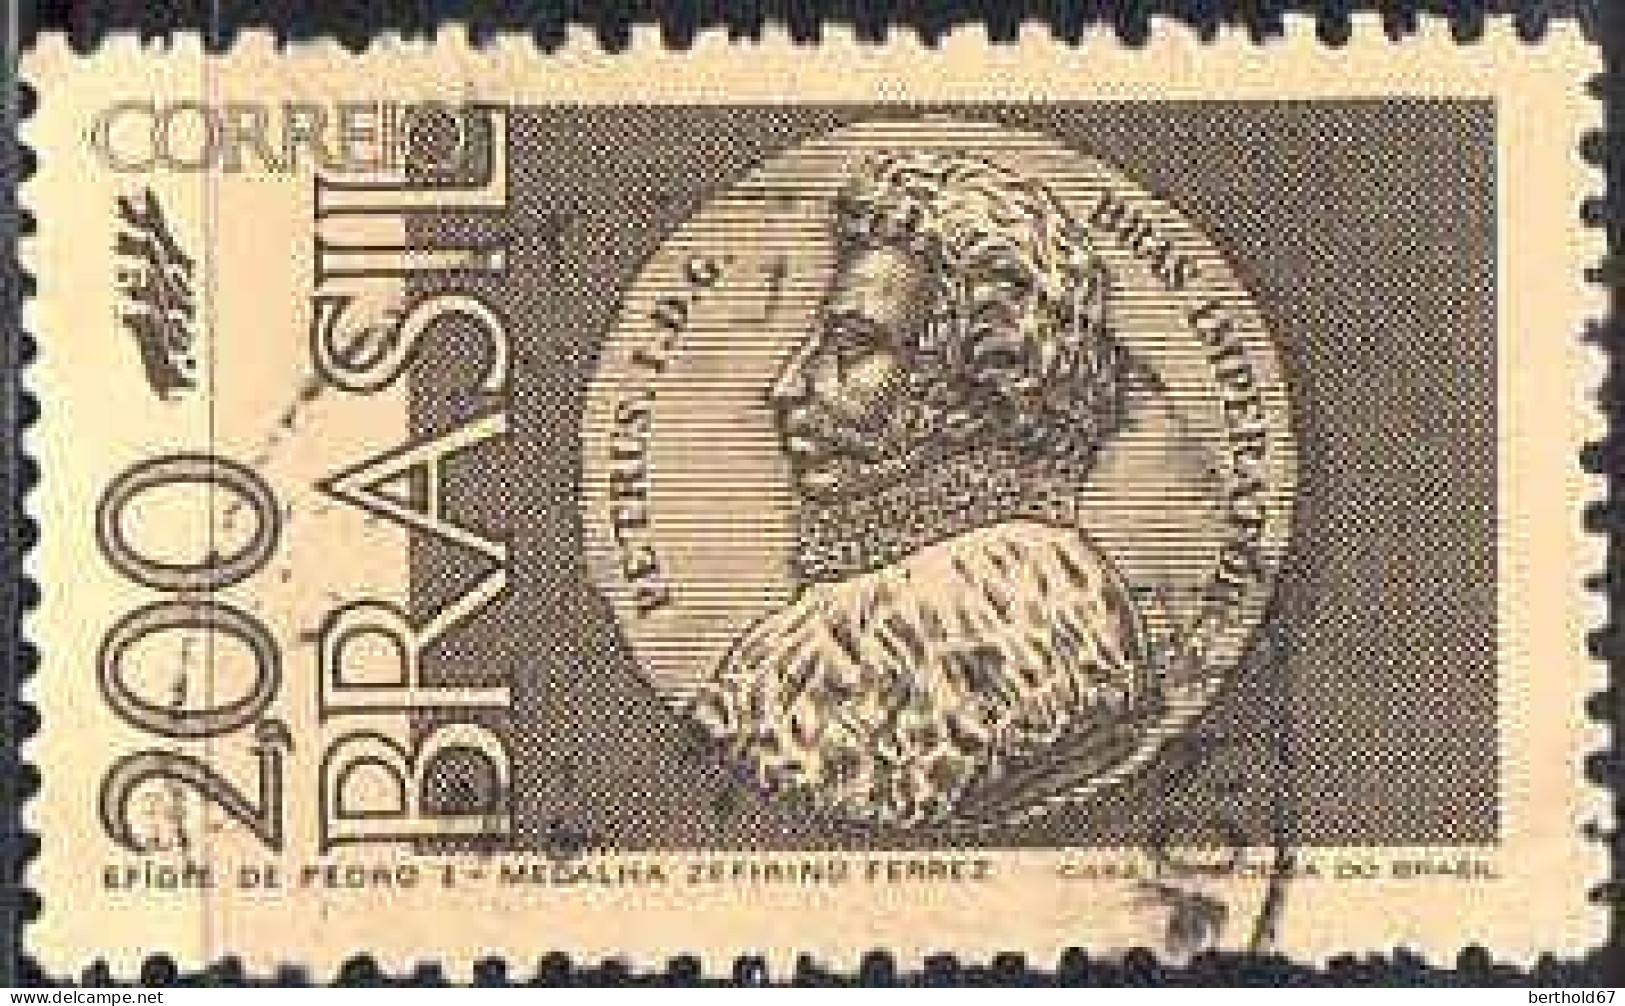 Brésil Poste Obl Yv:1010 Mi:1339 Efigie De Pedro I-Medalha Zefirino Ferrez (Beau Cachet Rond) - Usati